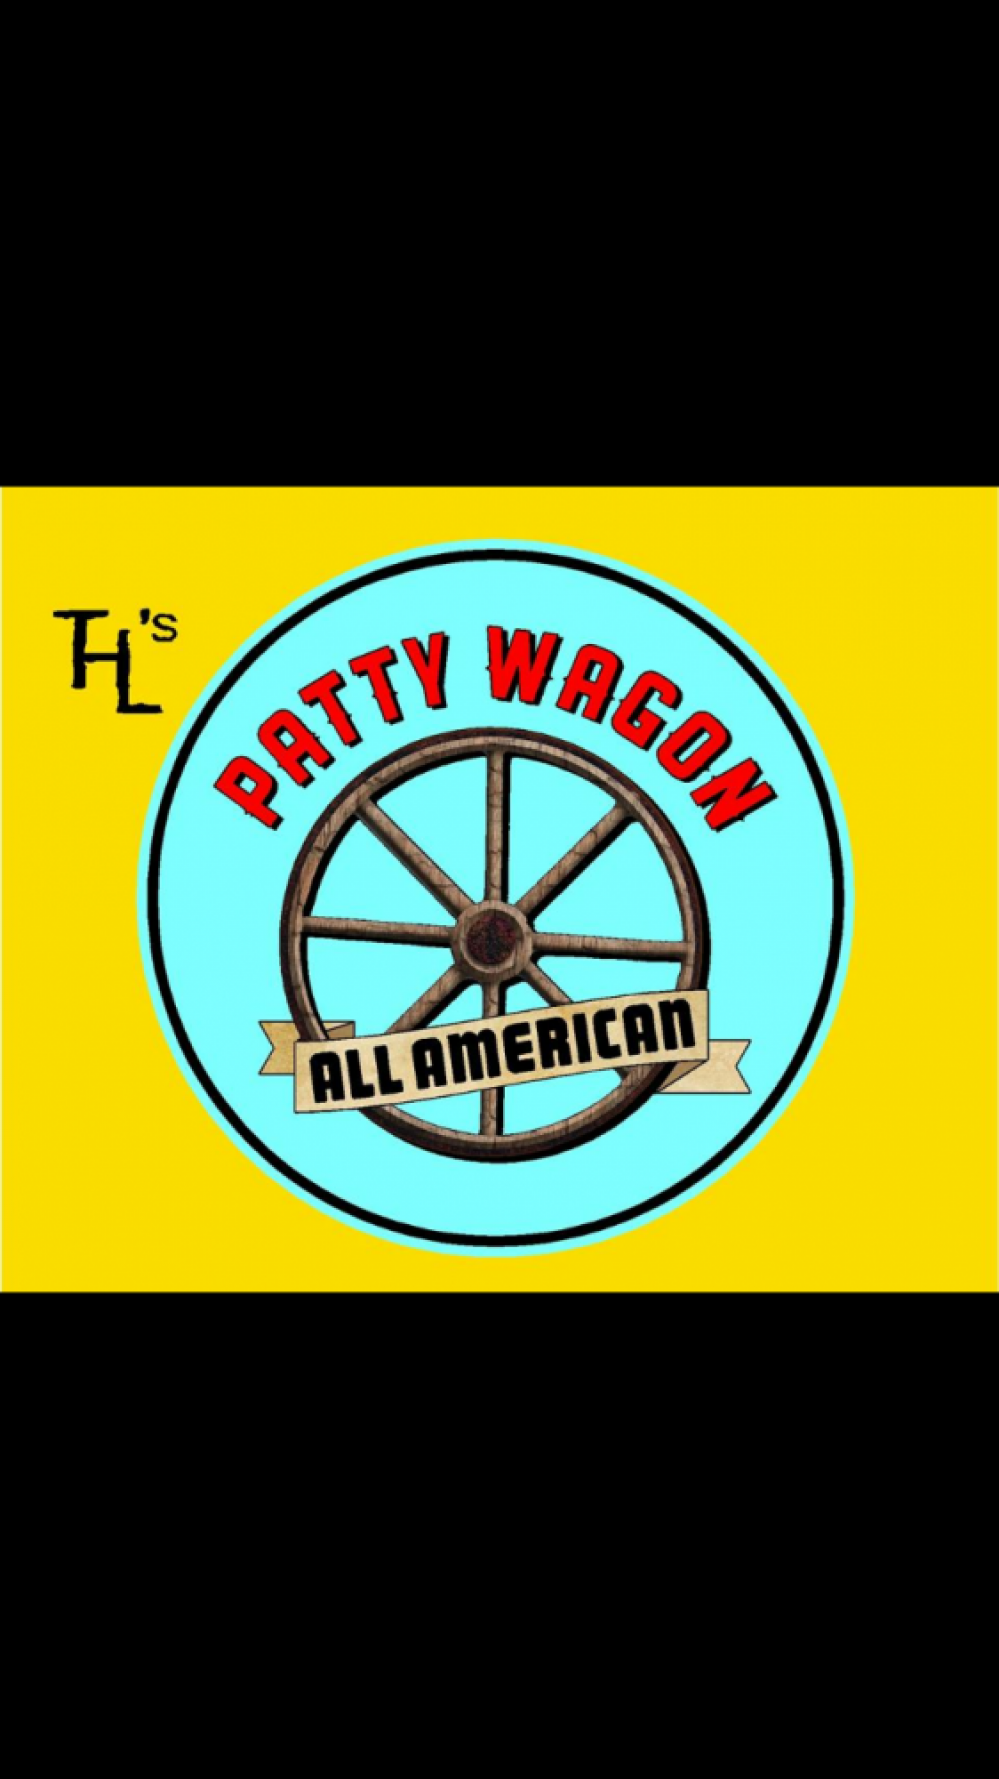 THL's Patty Wagon: All American